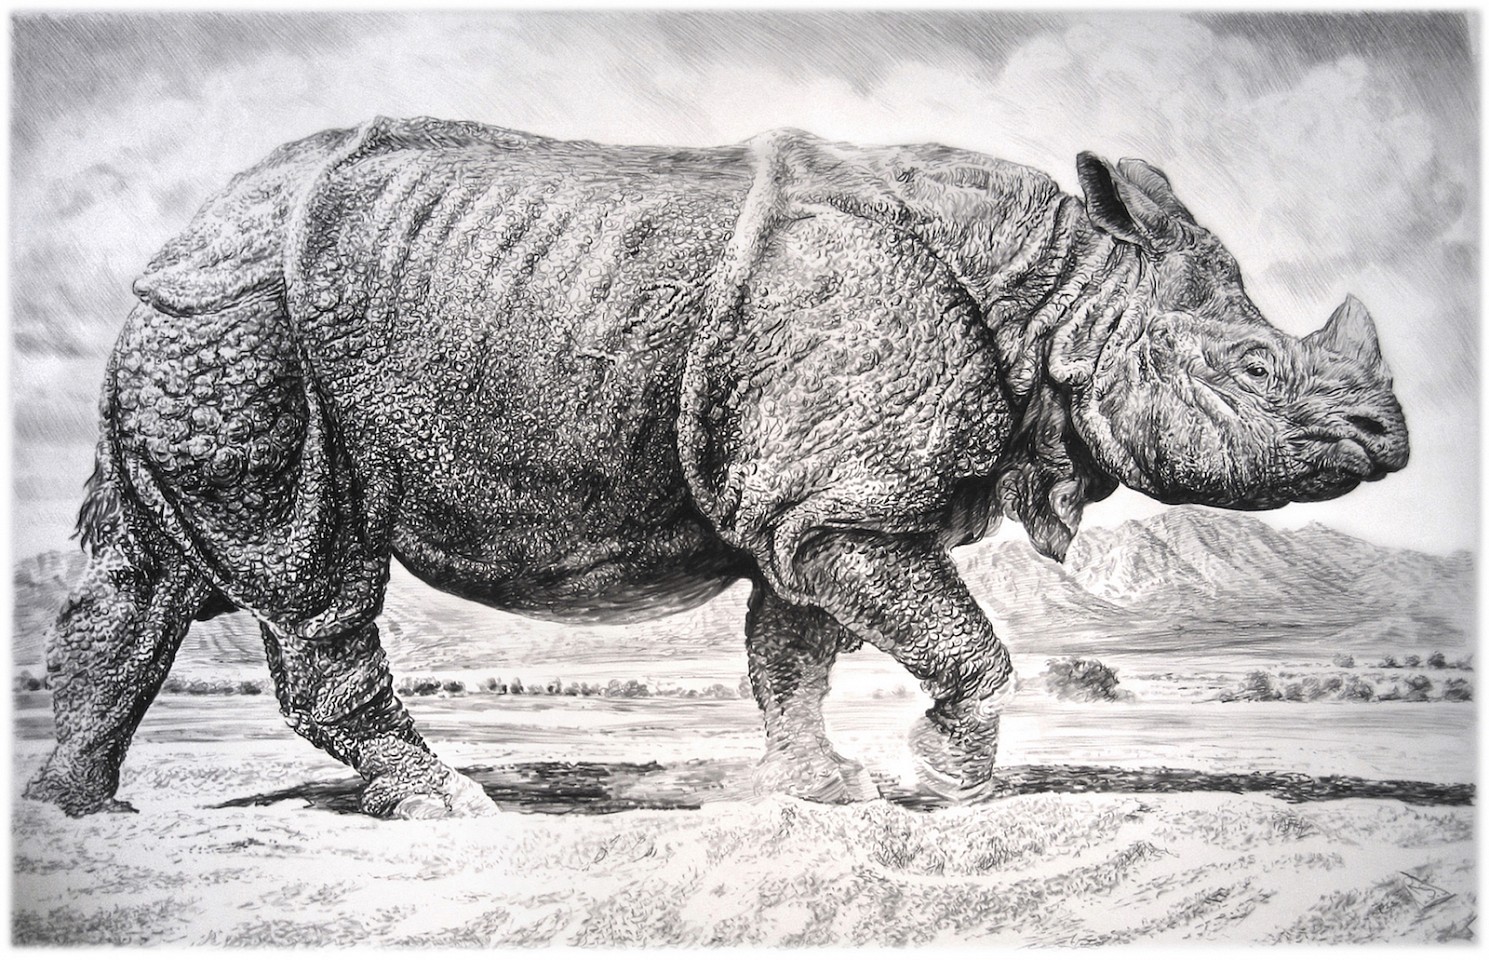 Rick Shaefer
Rhino II, 2016
shaef043
charcoal on vellum, 44 x 65 inches / 49 x 71 inches framed